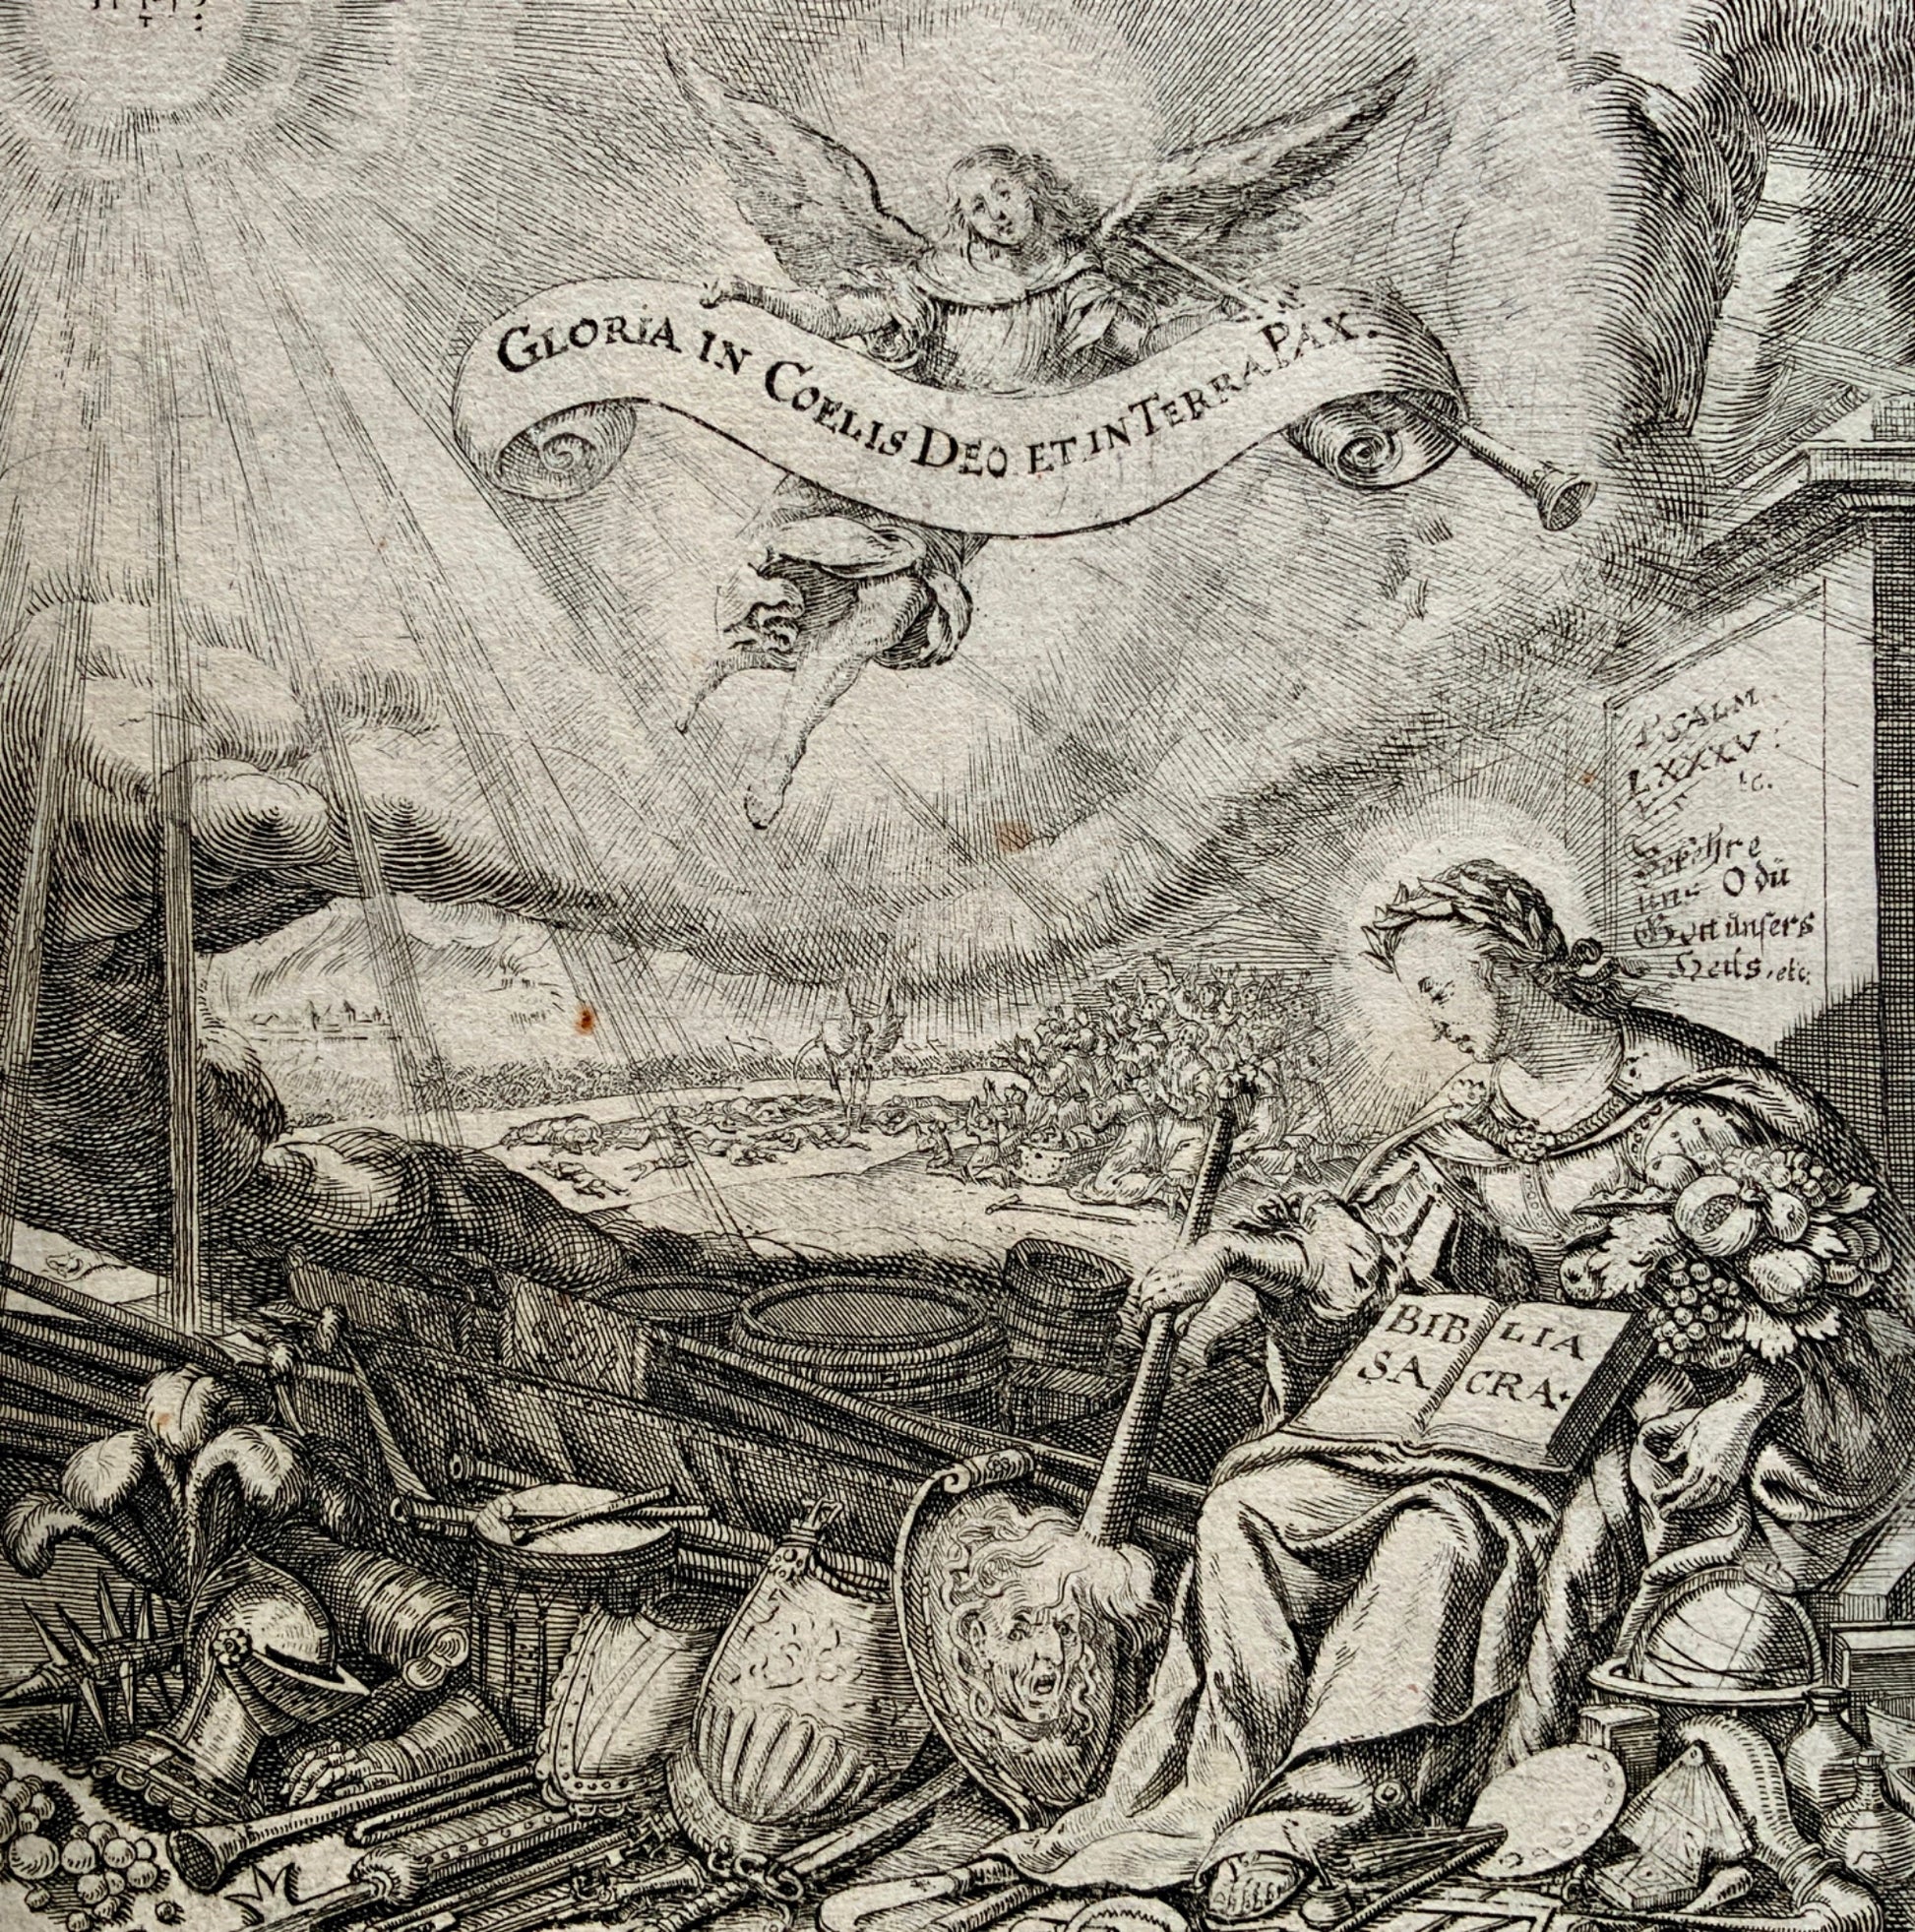 1680 EINBLATTDRUCK Conrad Meyer; Pax Optima Rerum. Gloria un Coelis - Religion